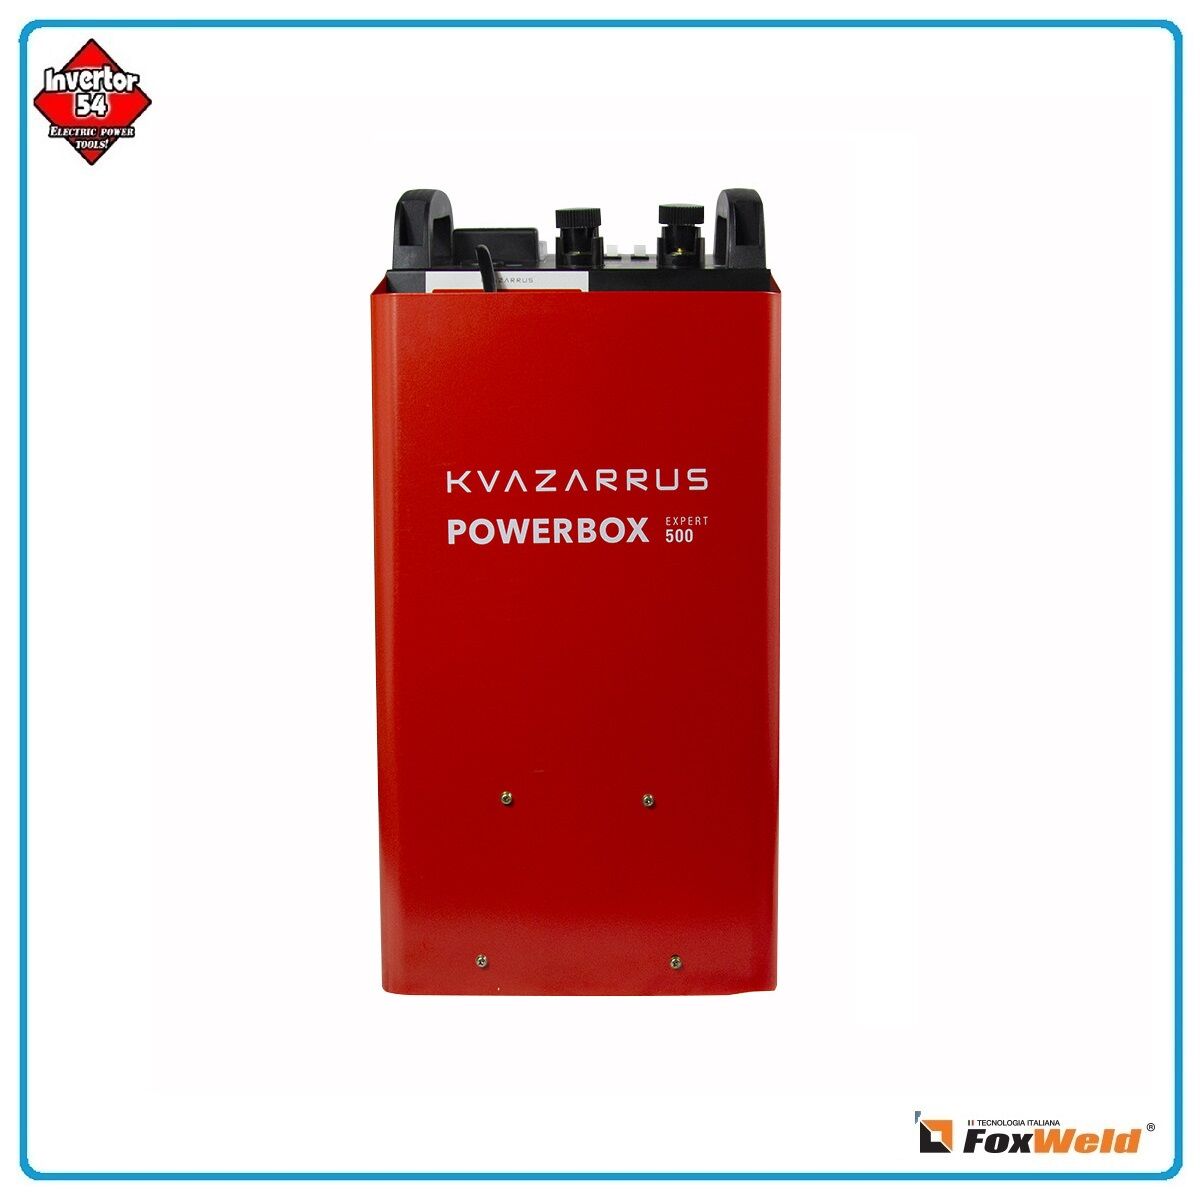 Устройство пуско-зарядное KVAZARRUS PowerBox 500